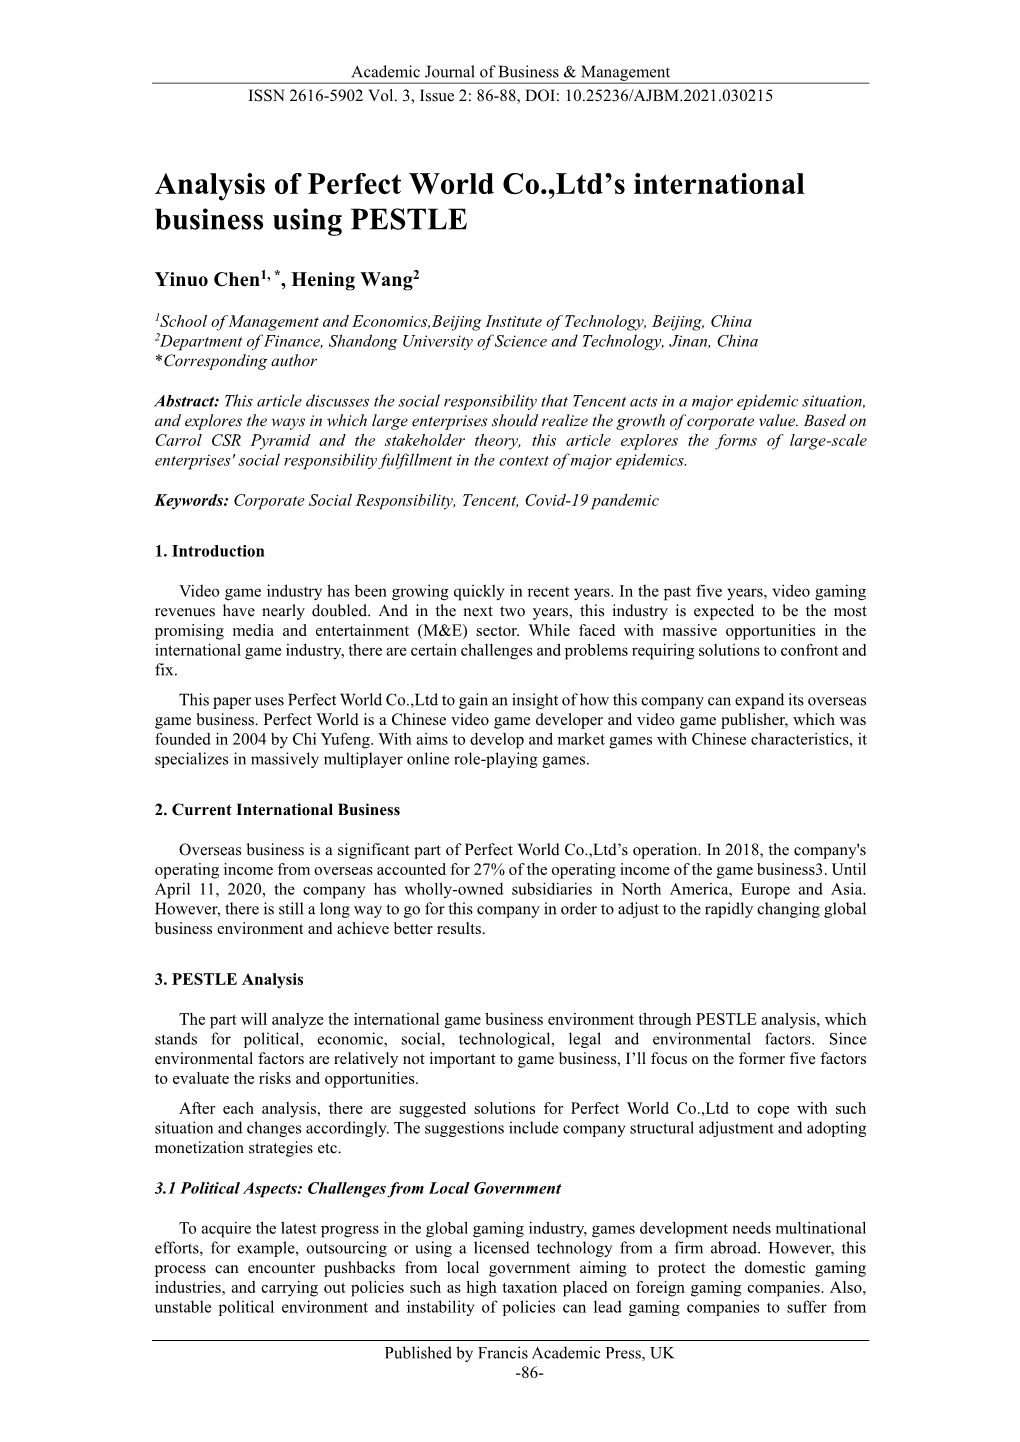 Analysis of Perfect World Co.,Ltd's International Business Using PESTLE